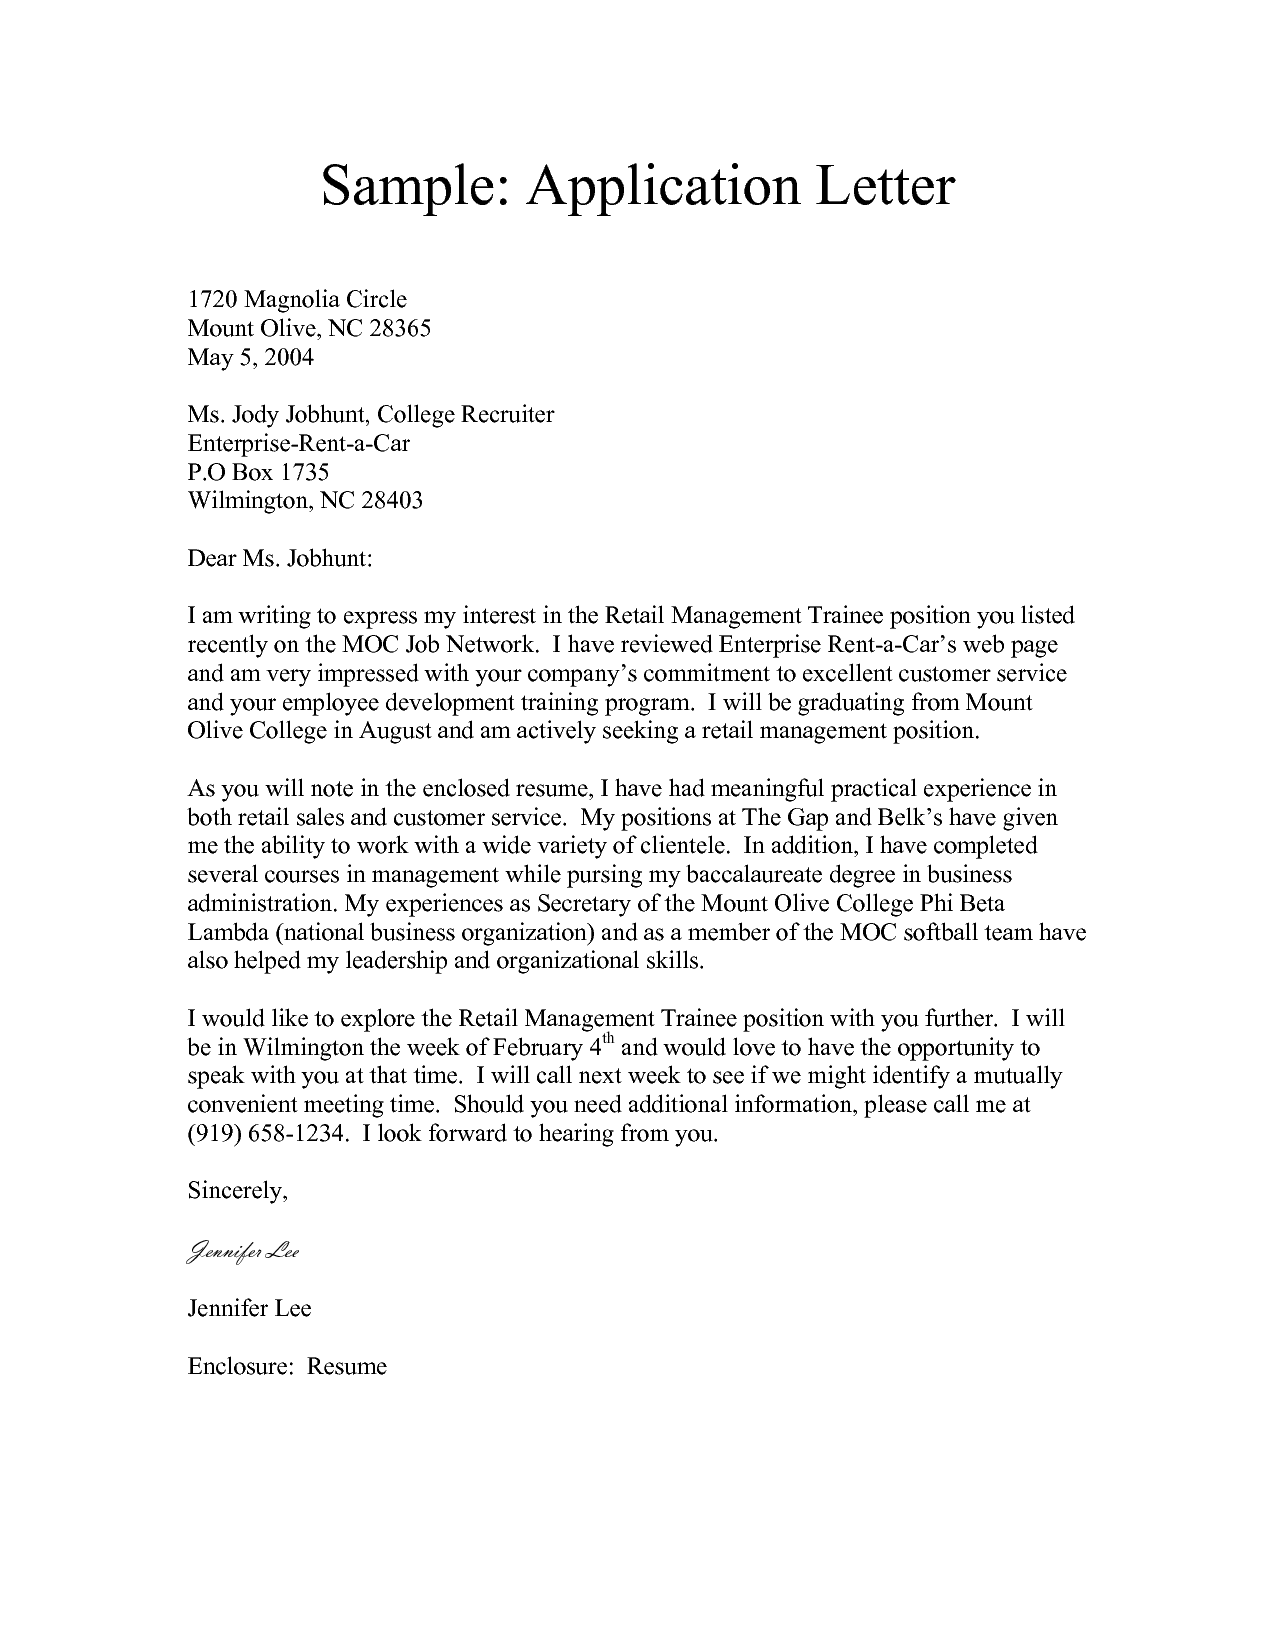 7+ Application Letter Samples - Sample Letters Word (1275 x 1650 Pixel)